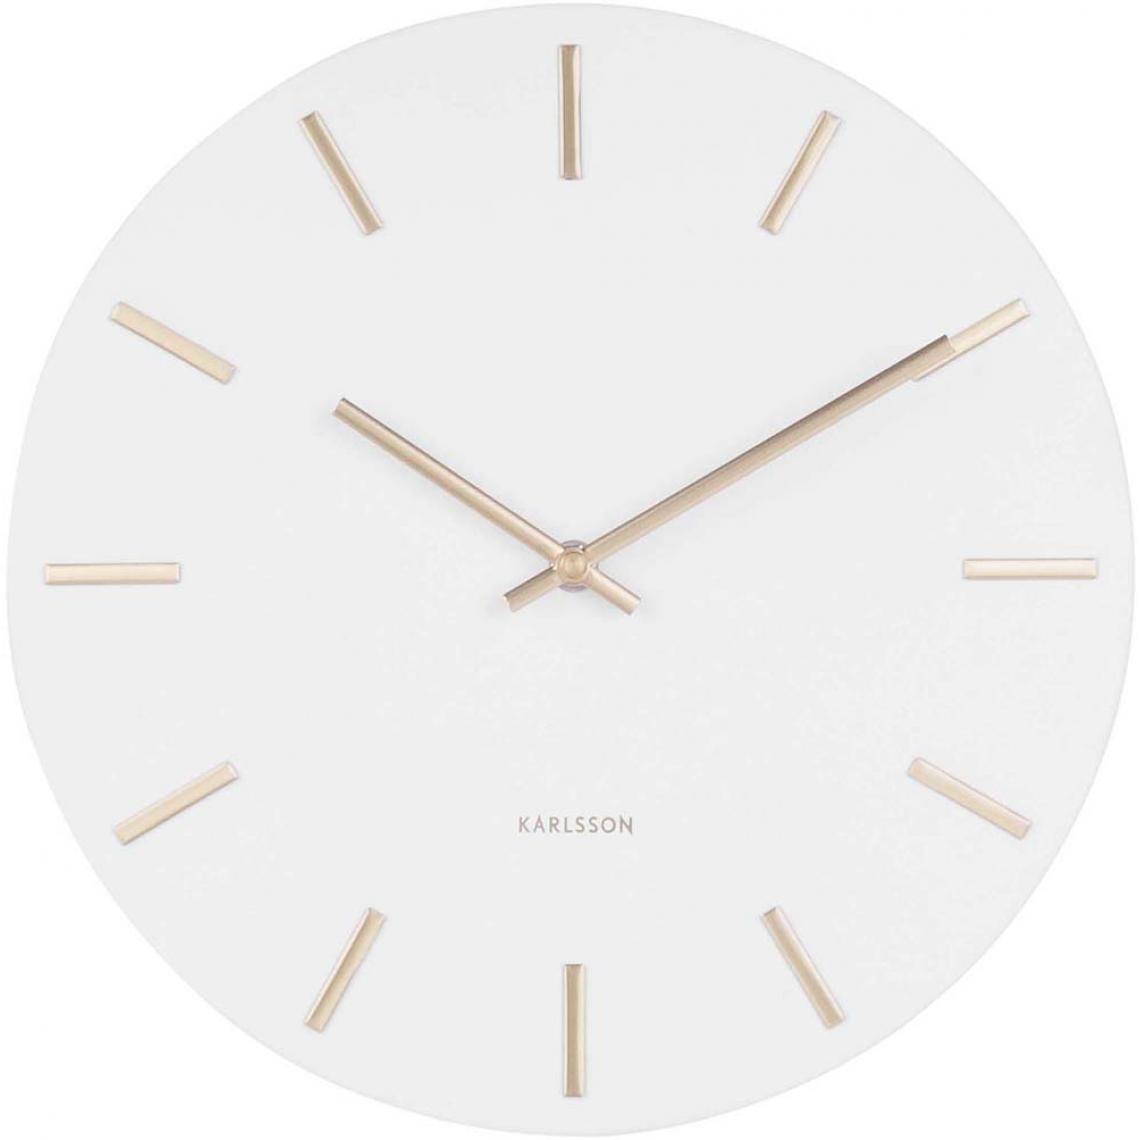 Karlsson - Horloge moderne métal Charm 30 cm - Horloges, pendules